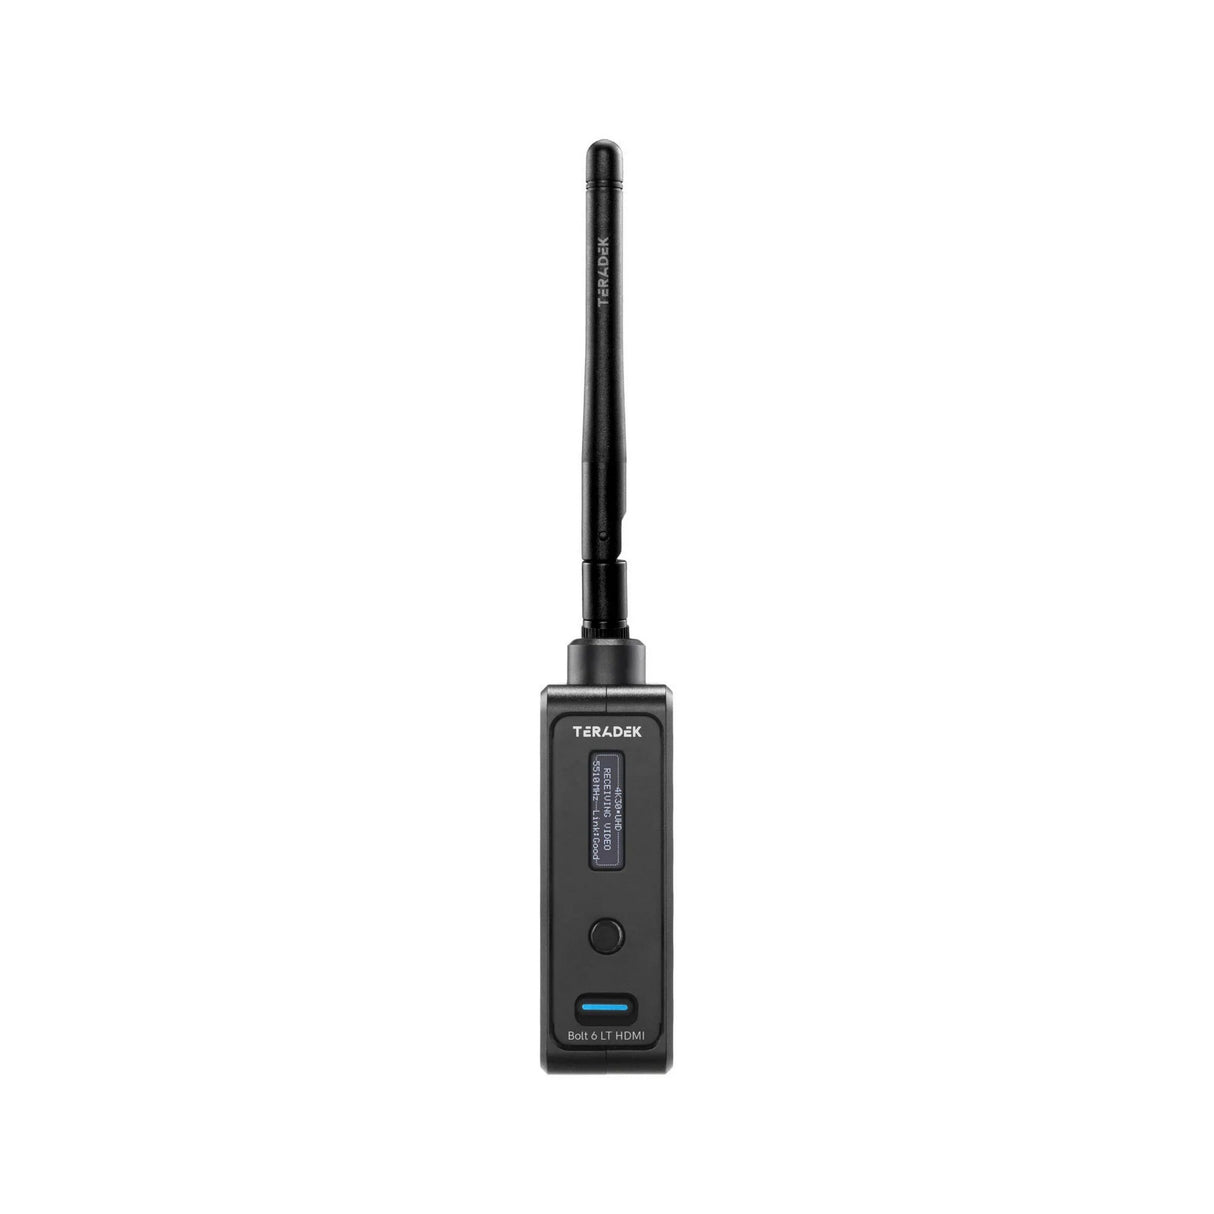 Teradek 10-2267-V Bolt 6 LT HDMI 750 Wireless Video Receiver, V-Mount